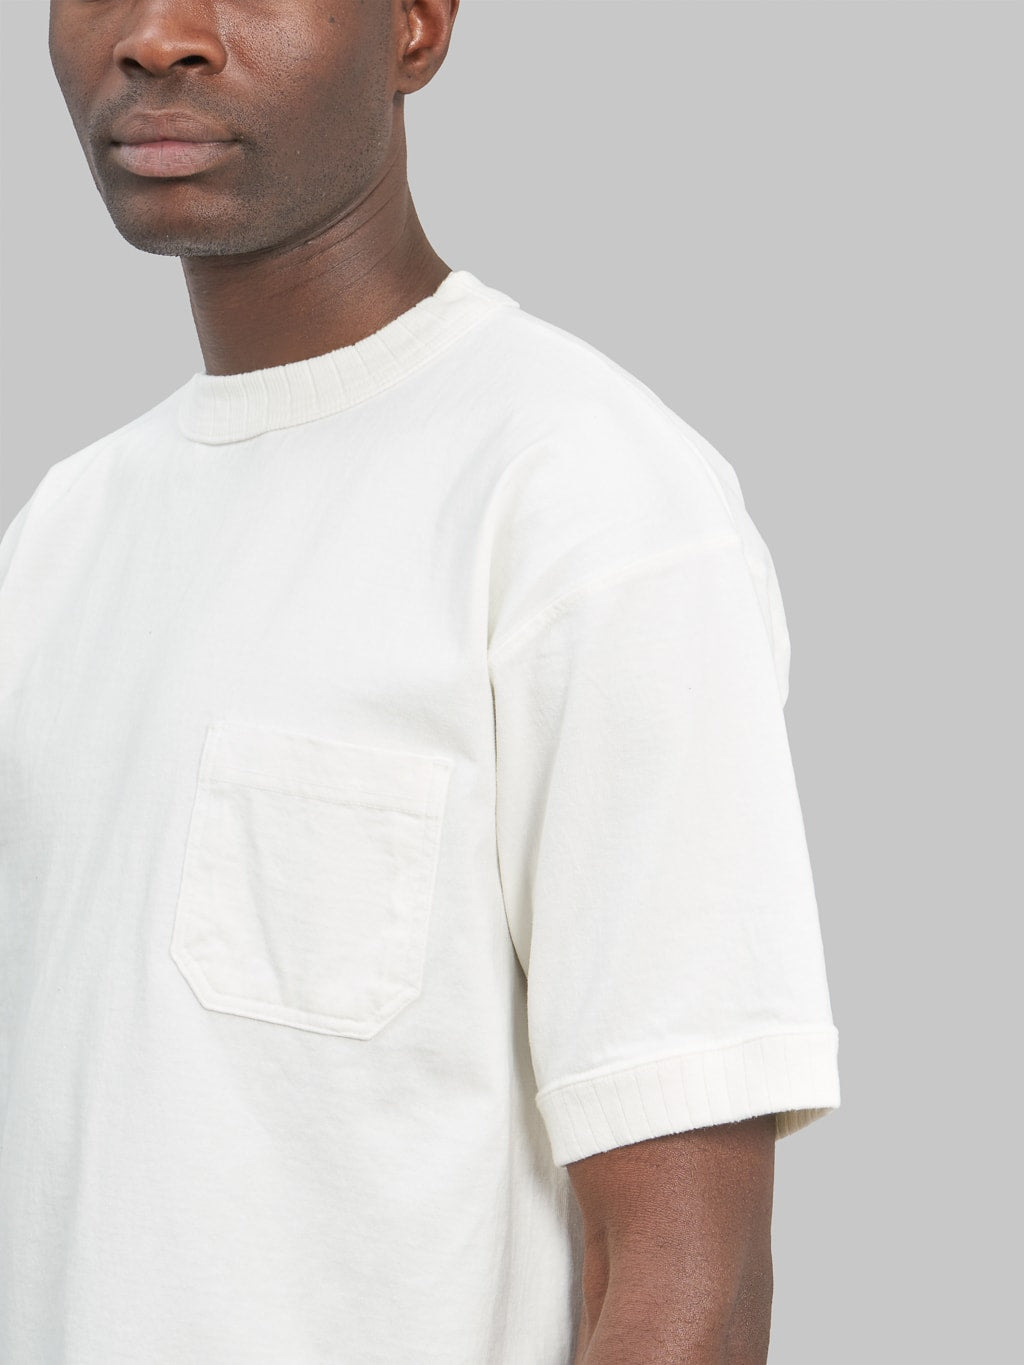 ONI Denim T01 8oz Loopwheeled Heavyweight T-Shirt White